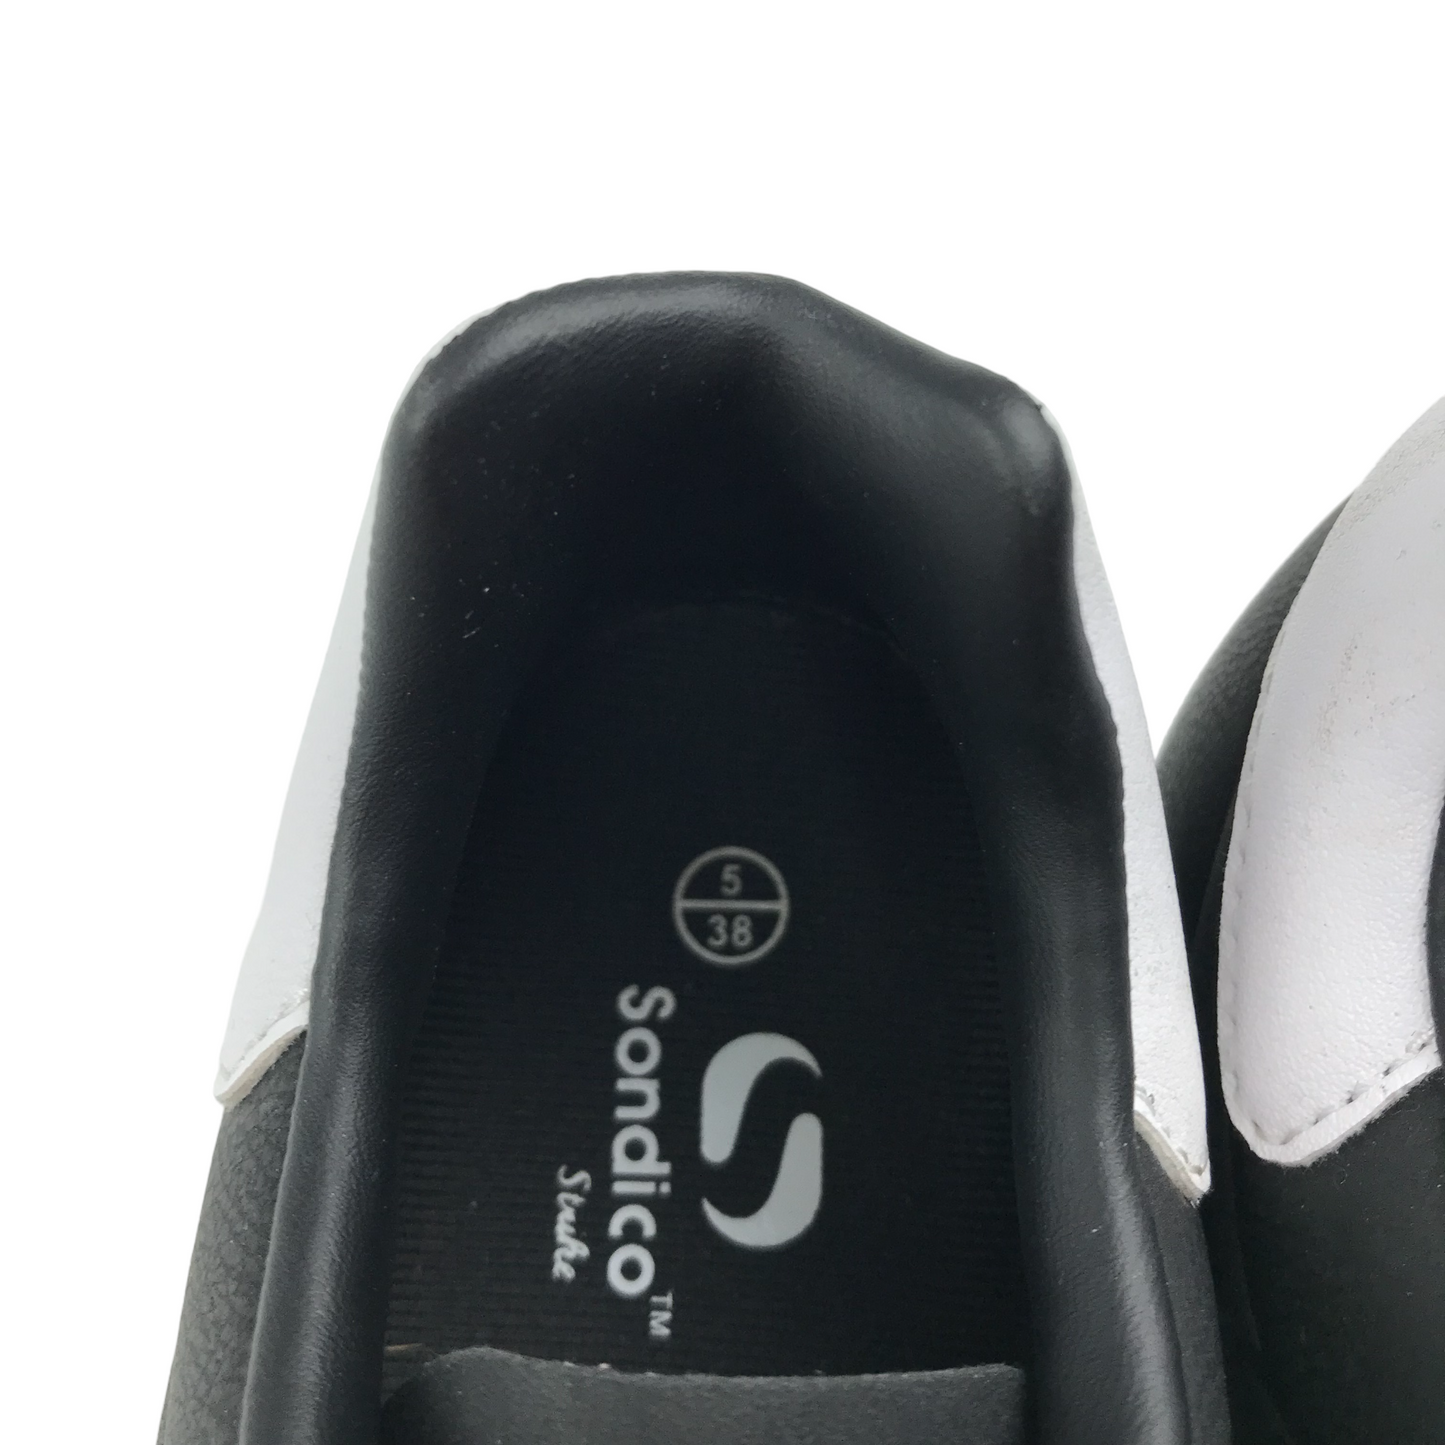 Sondico Black and White Football Boots Shoe Size 5